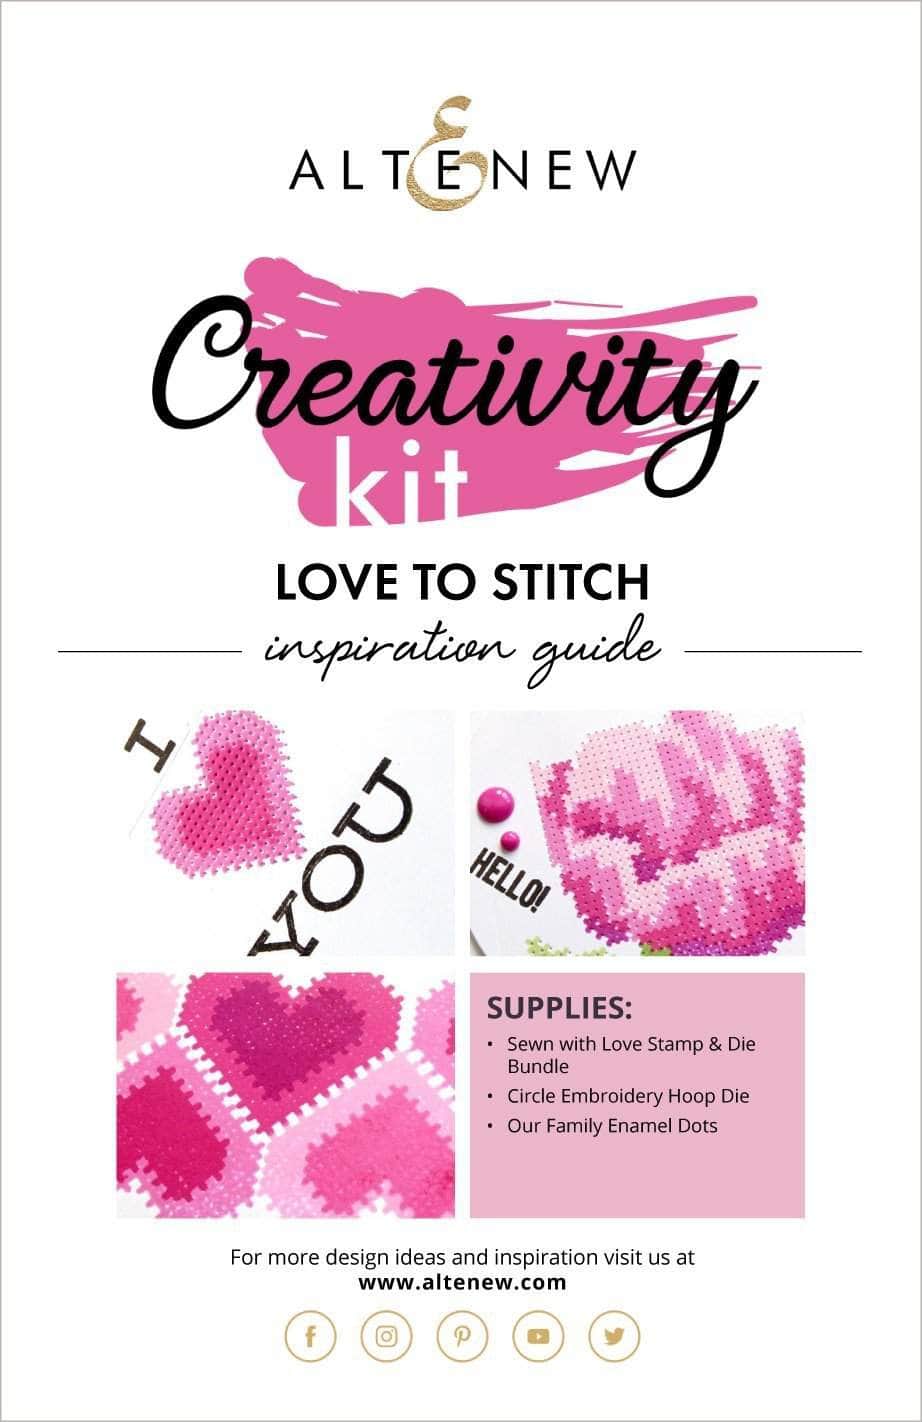 Printed Media Love To Stitch Creativity Kit Inspiration Guide